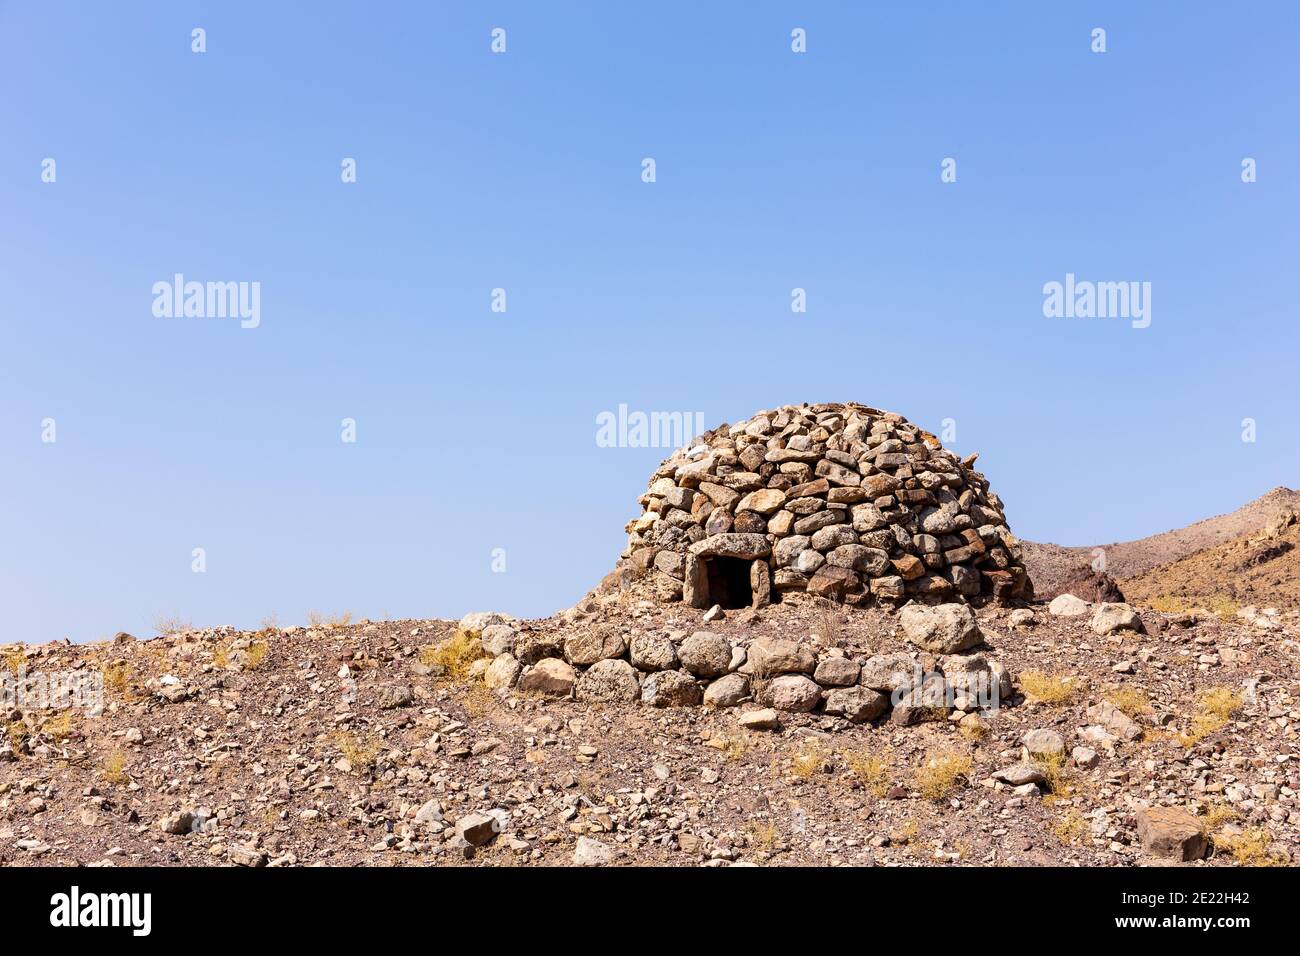 Round stony shelter on the hill in Hajar Mountains, Hatta, United Arab Emirates. Stock Photo